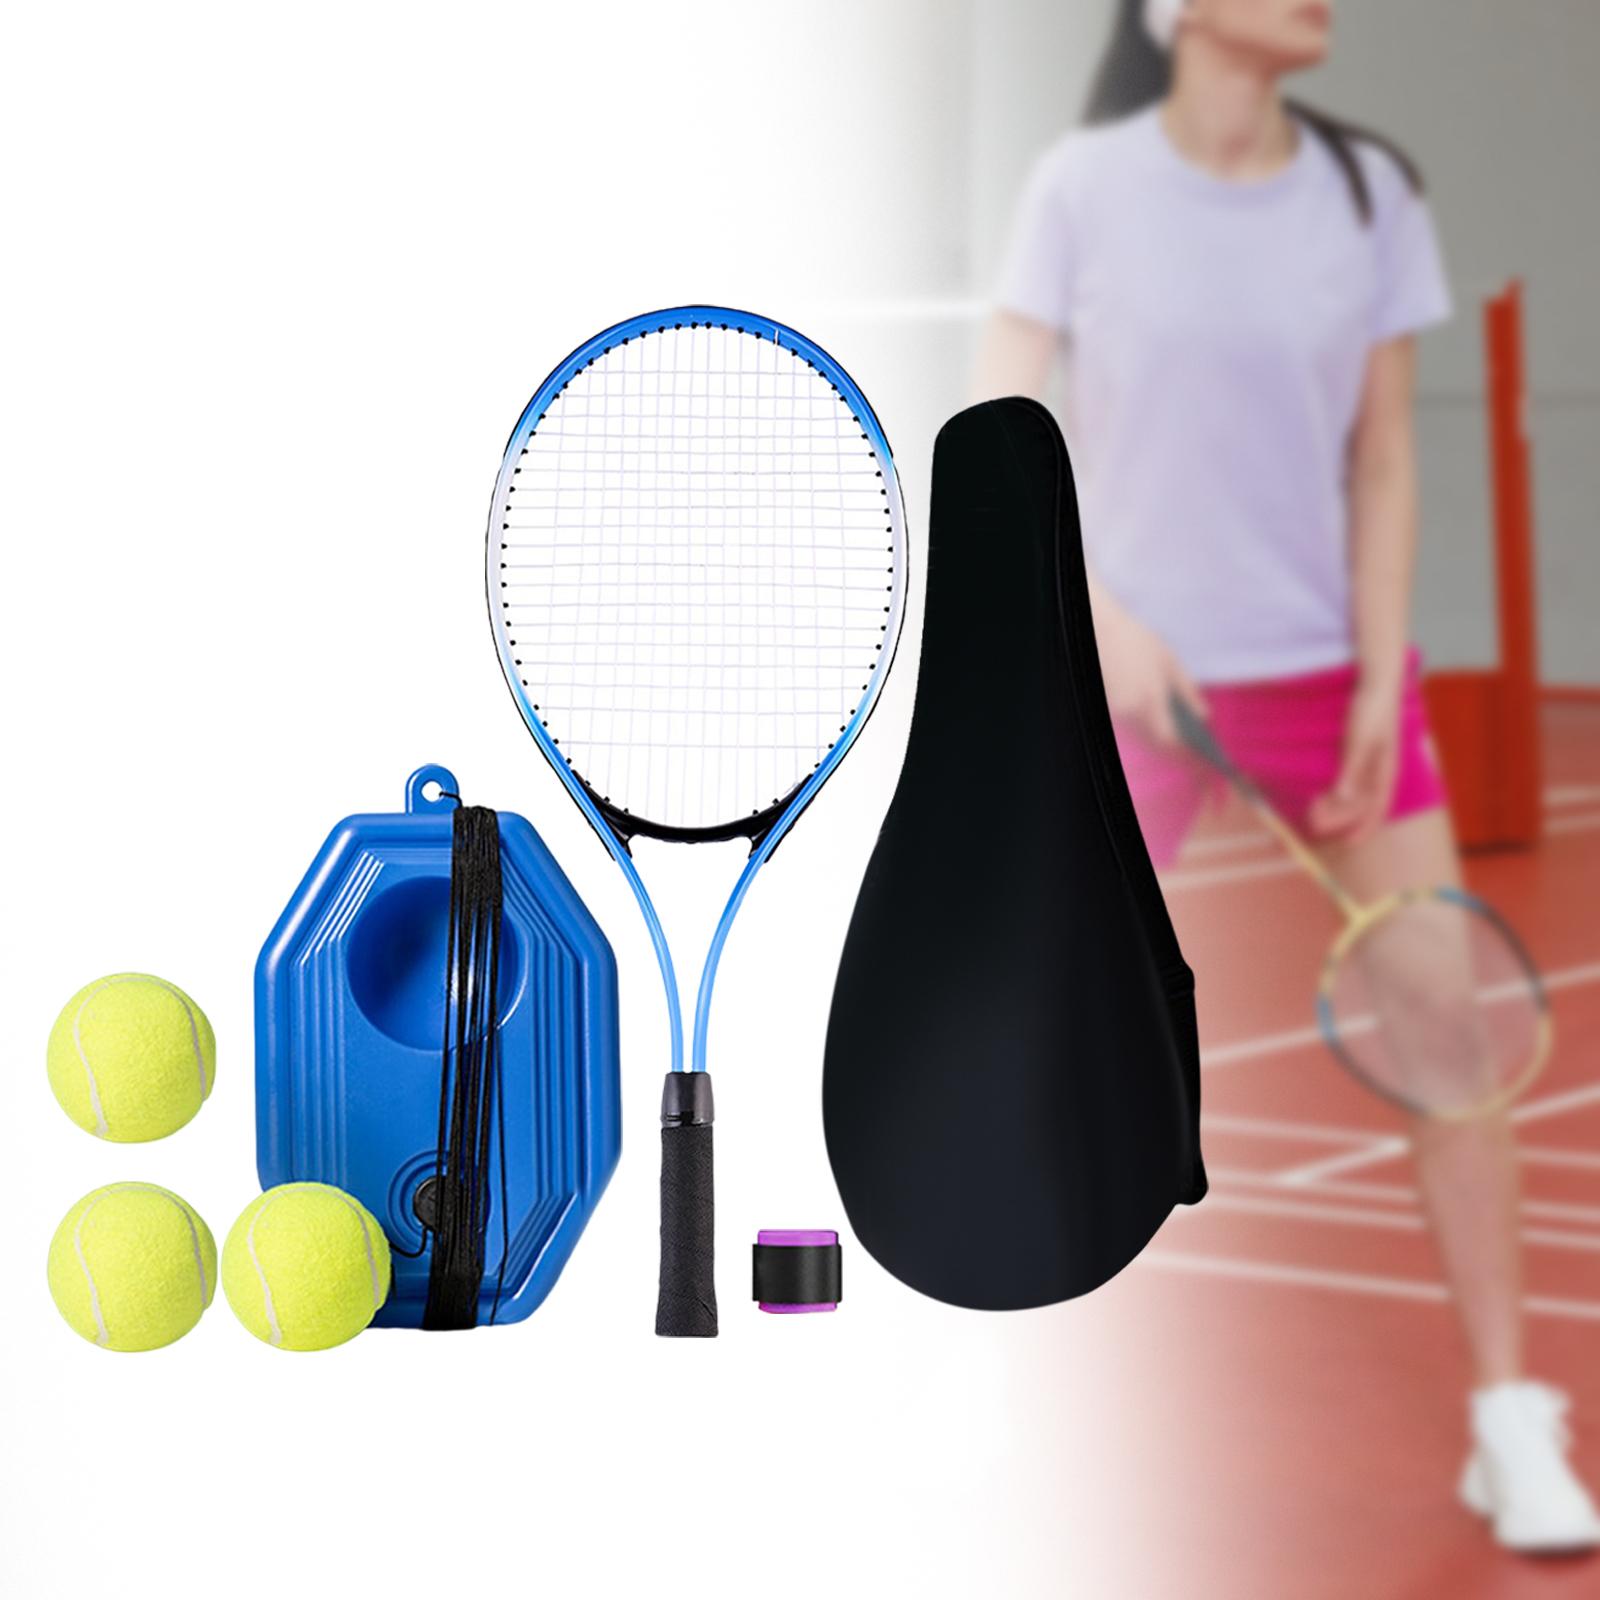 Tennis Trainer Rebound Ball Solo Training for Beginners Garden Self Practice Style C